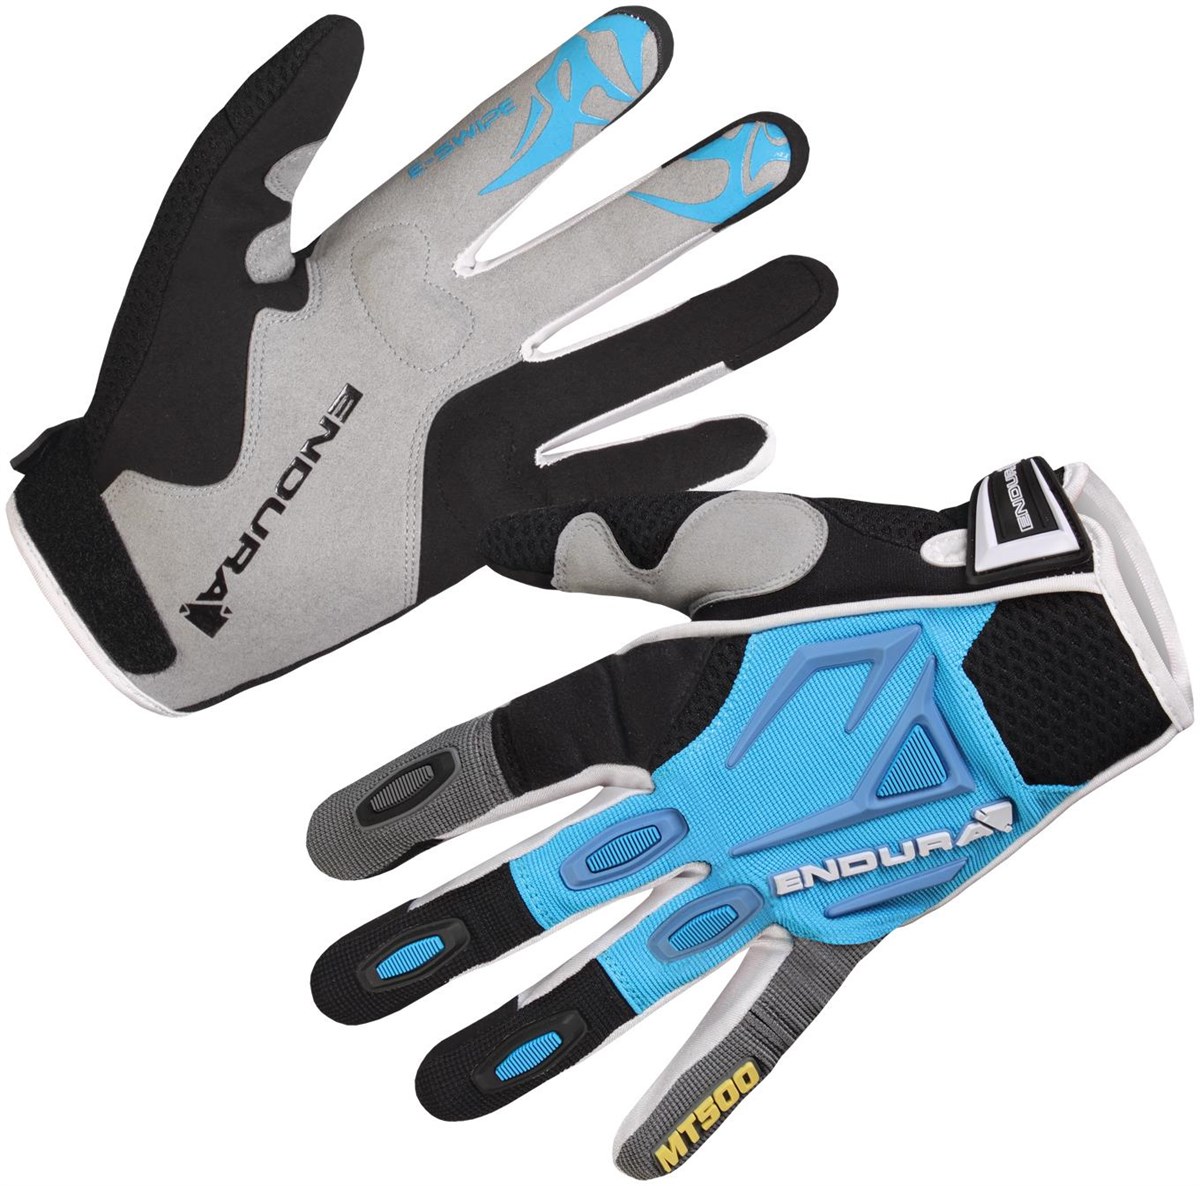 Endura MT500 Womens Long Finger Cycling Gloves AW16